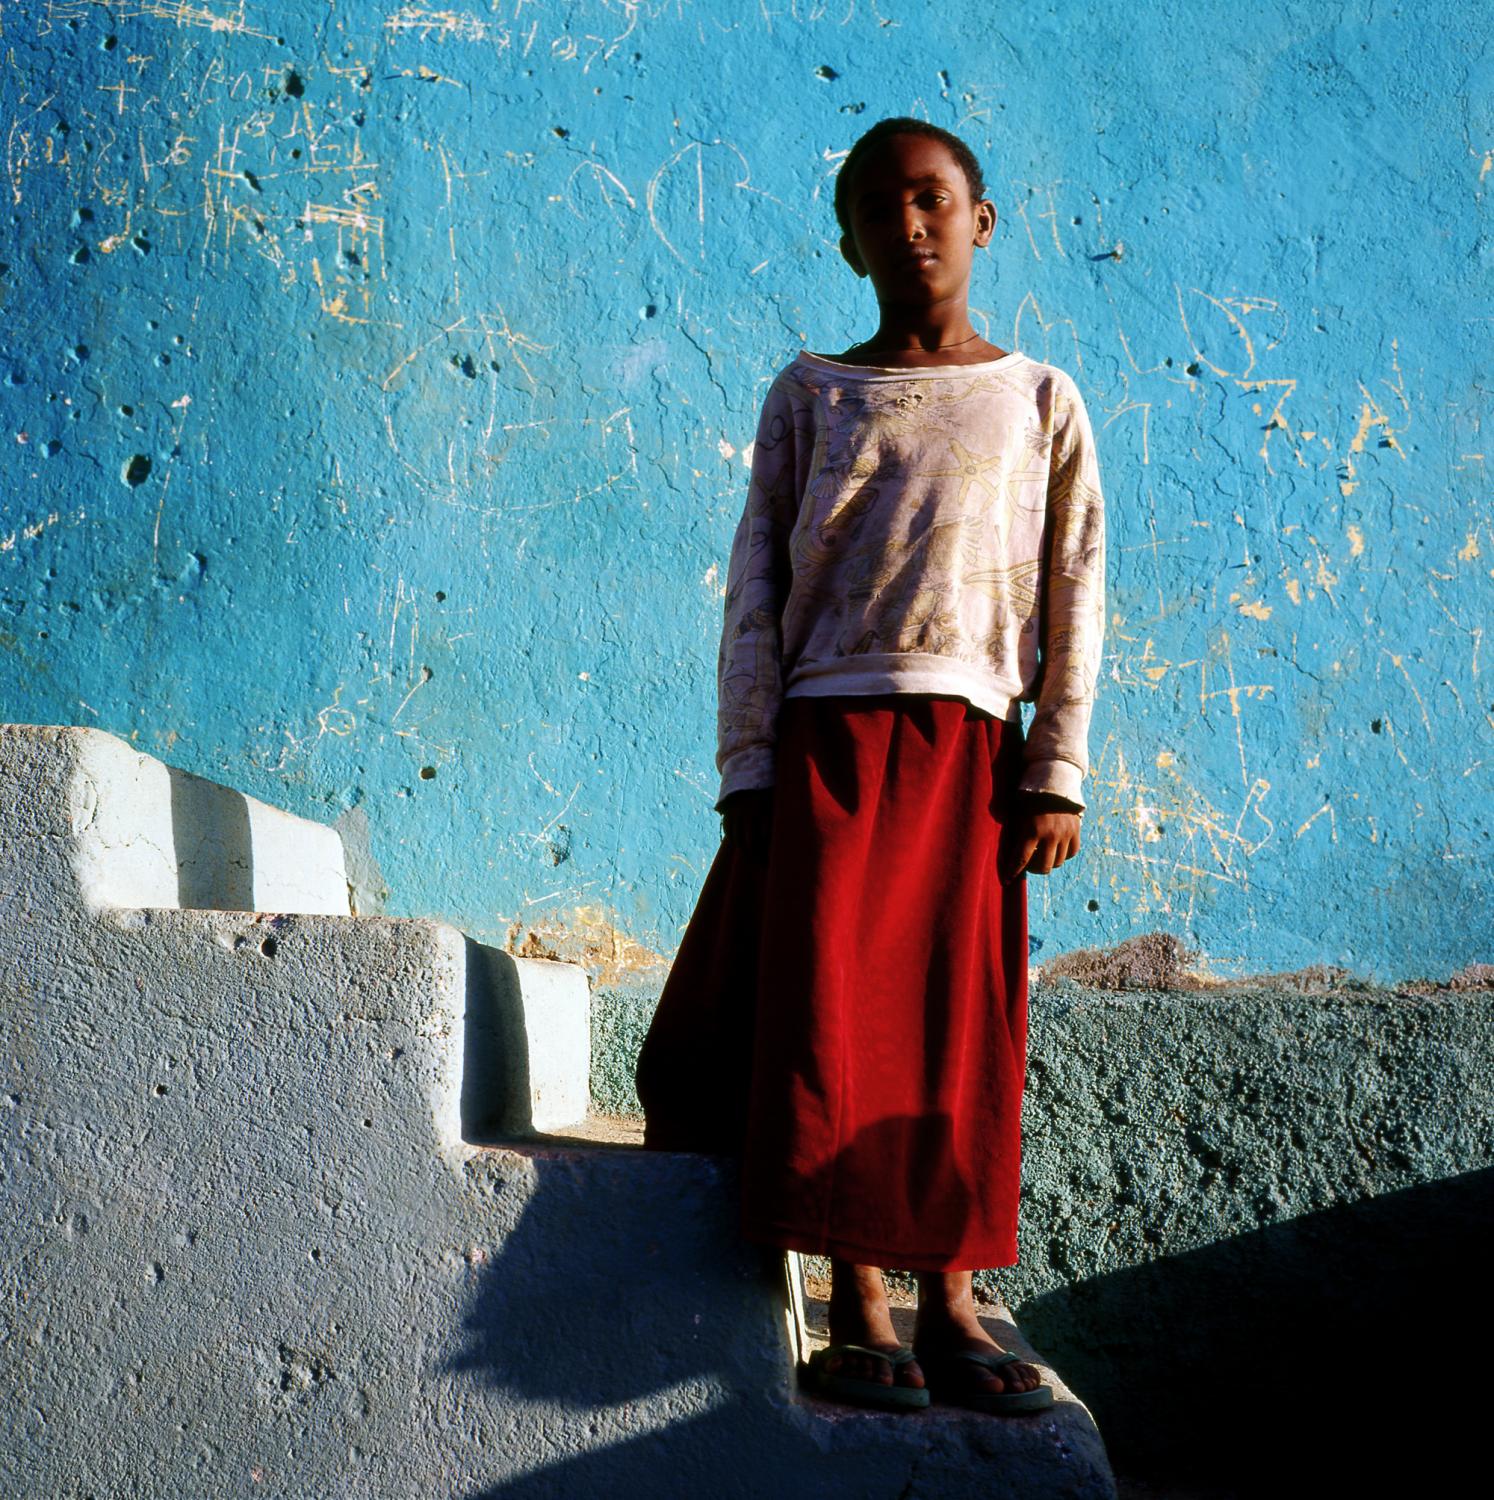 Ethiopia - ETHIOPIA Humera, Tigray A young girl whose parents both...